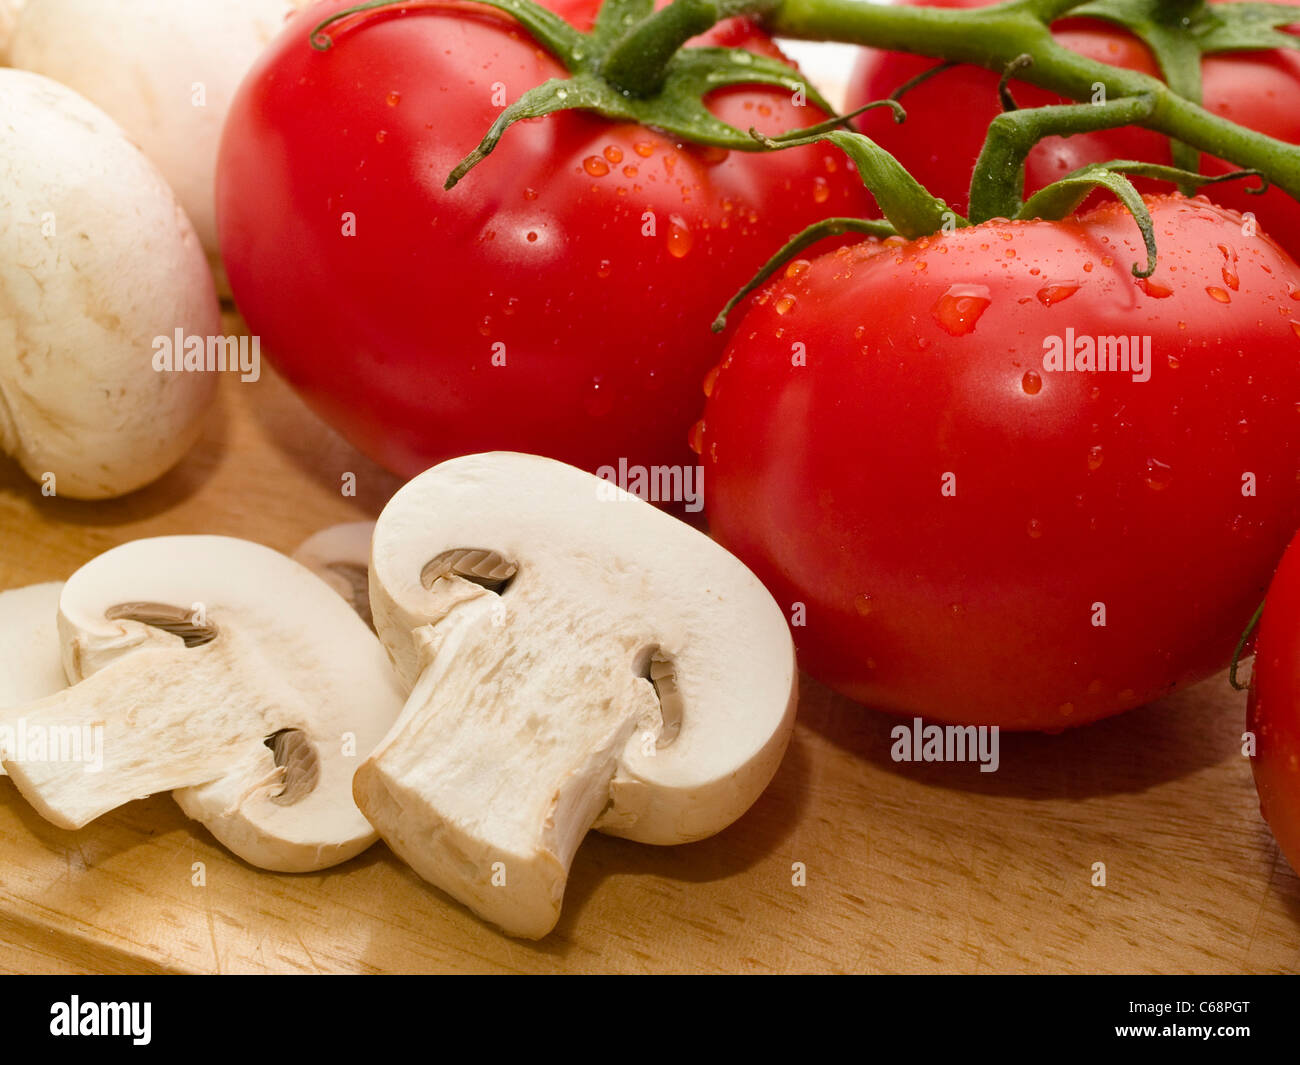 auf einem Holzbrett liegen Chamignons und Tomaten | on a wood board are mushrooms and tomatoes Stock Photo